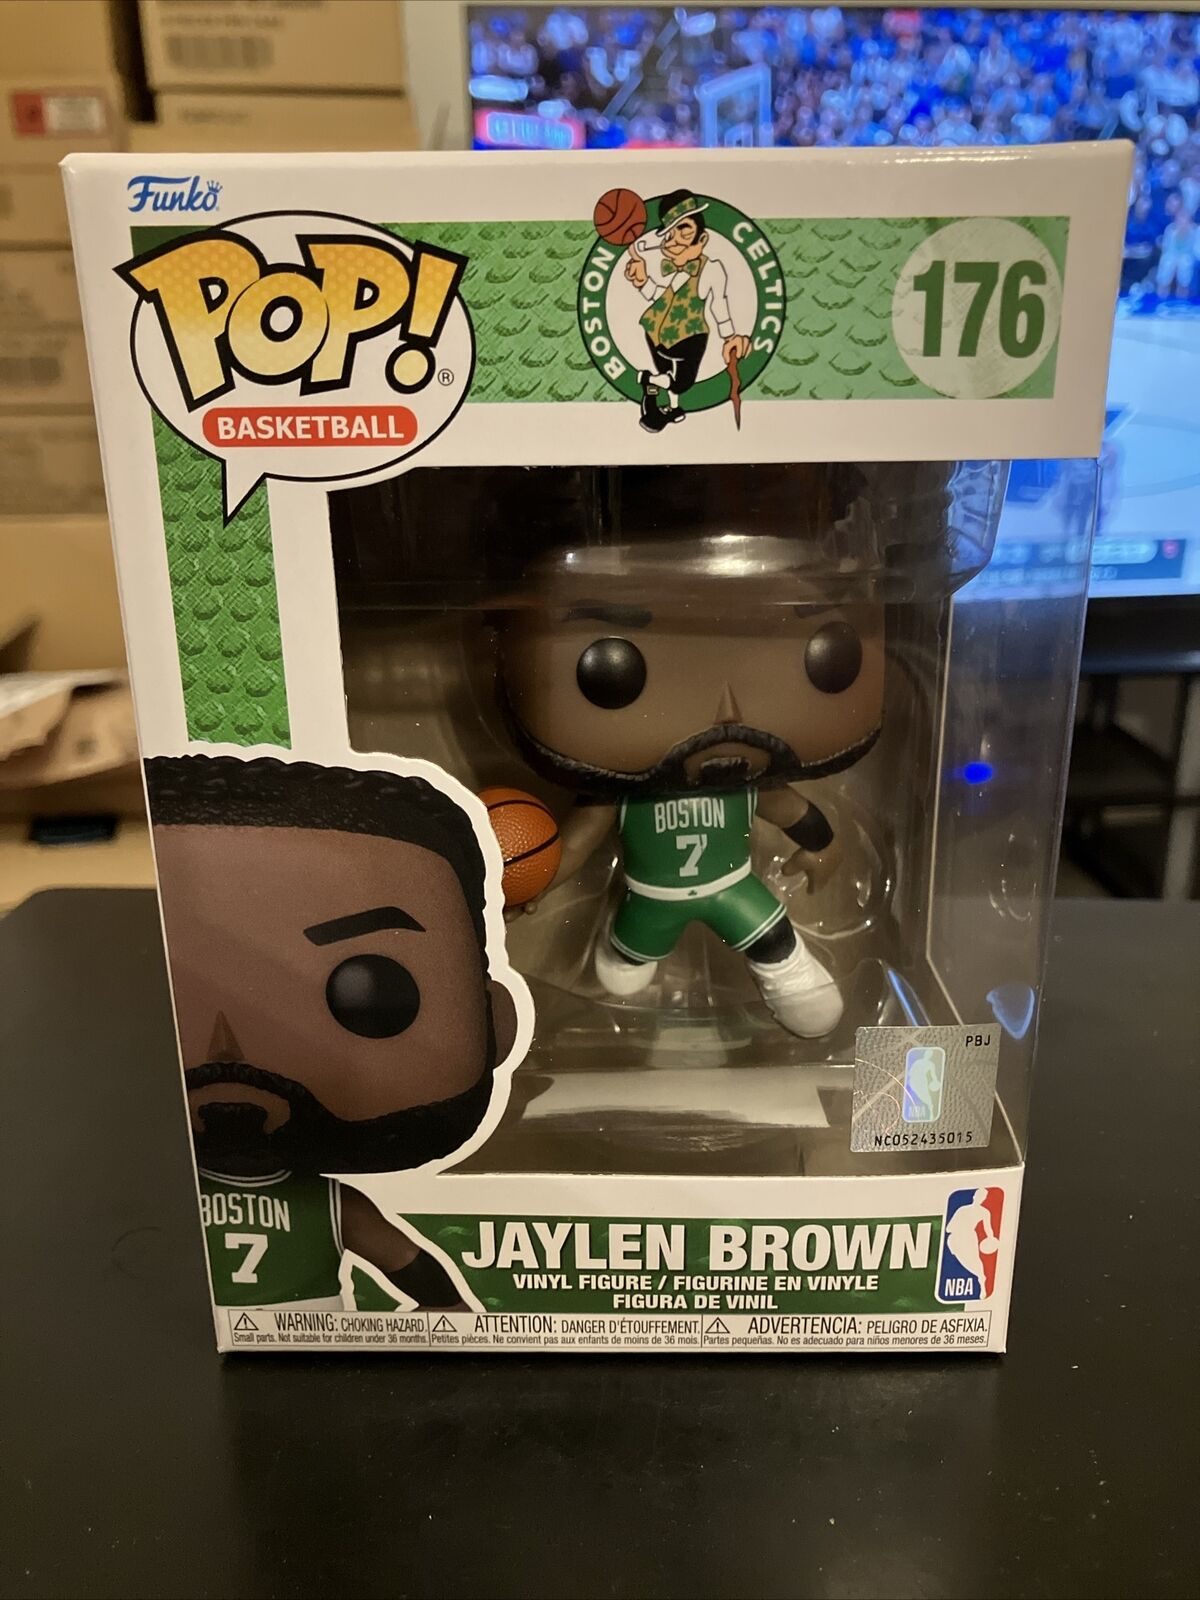 Jaylen Brown (Boston Celtics) Funko Pop NBA Series 11